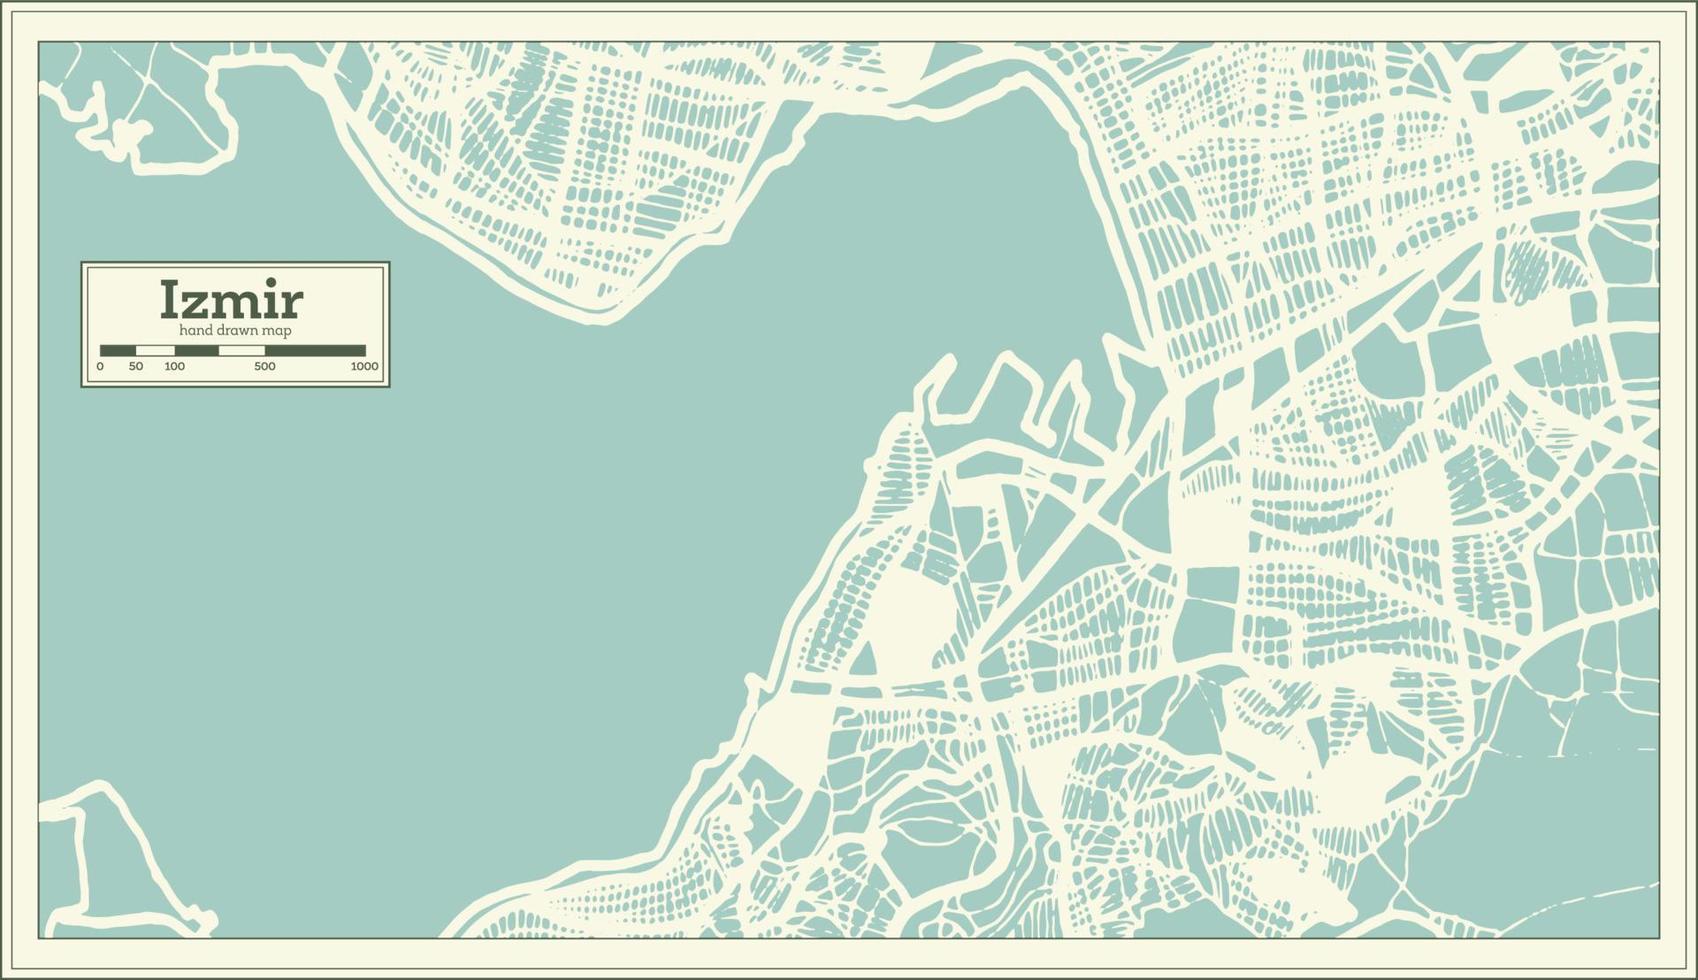 Izmir tacchino città carta geografica nel retrò stile. schema carta geografica. vettore